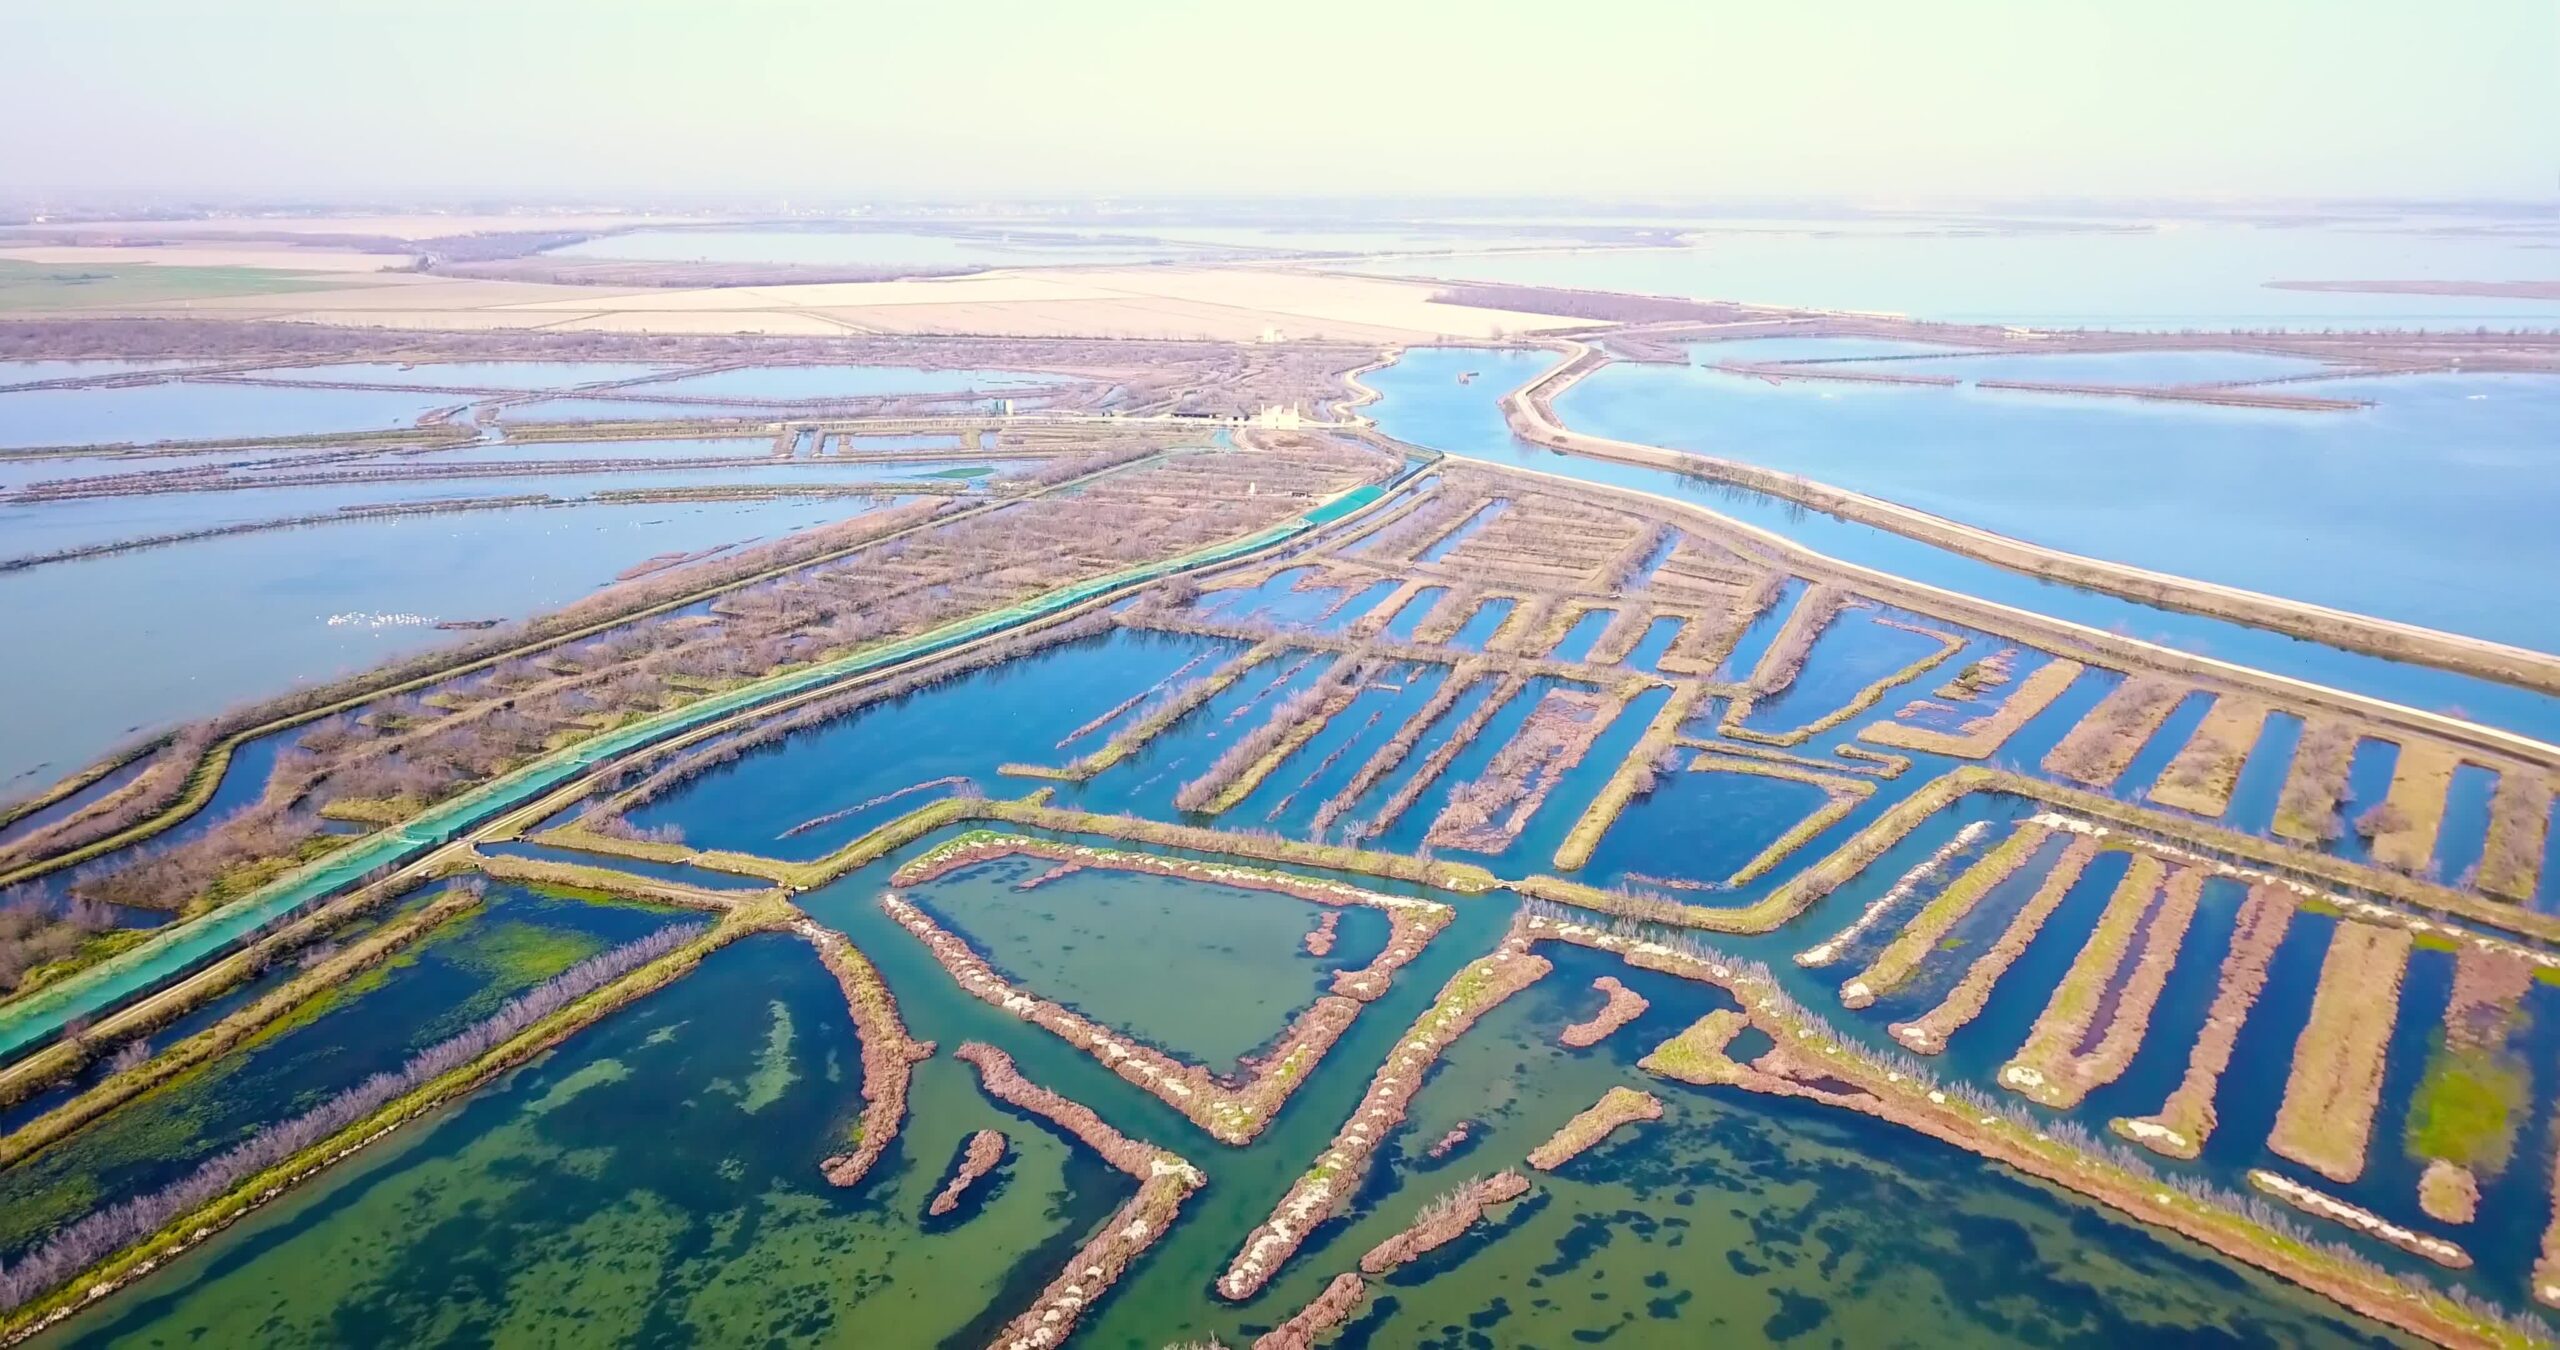 Countless venice lagoon ponds flowing among narrow polders